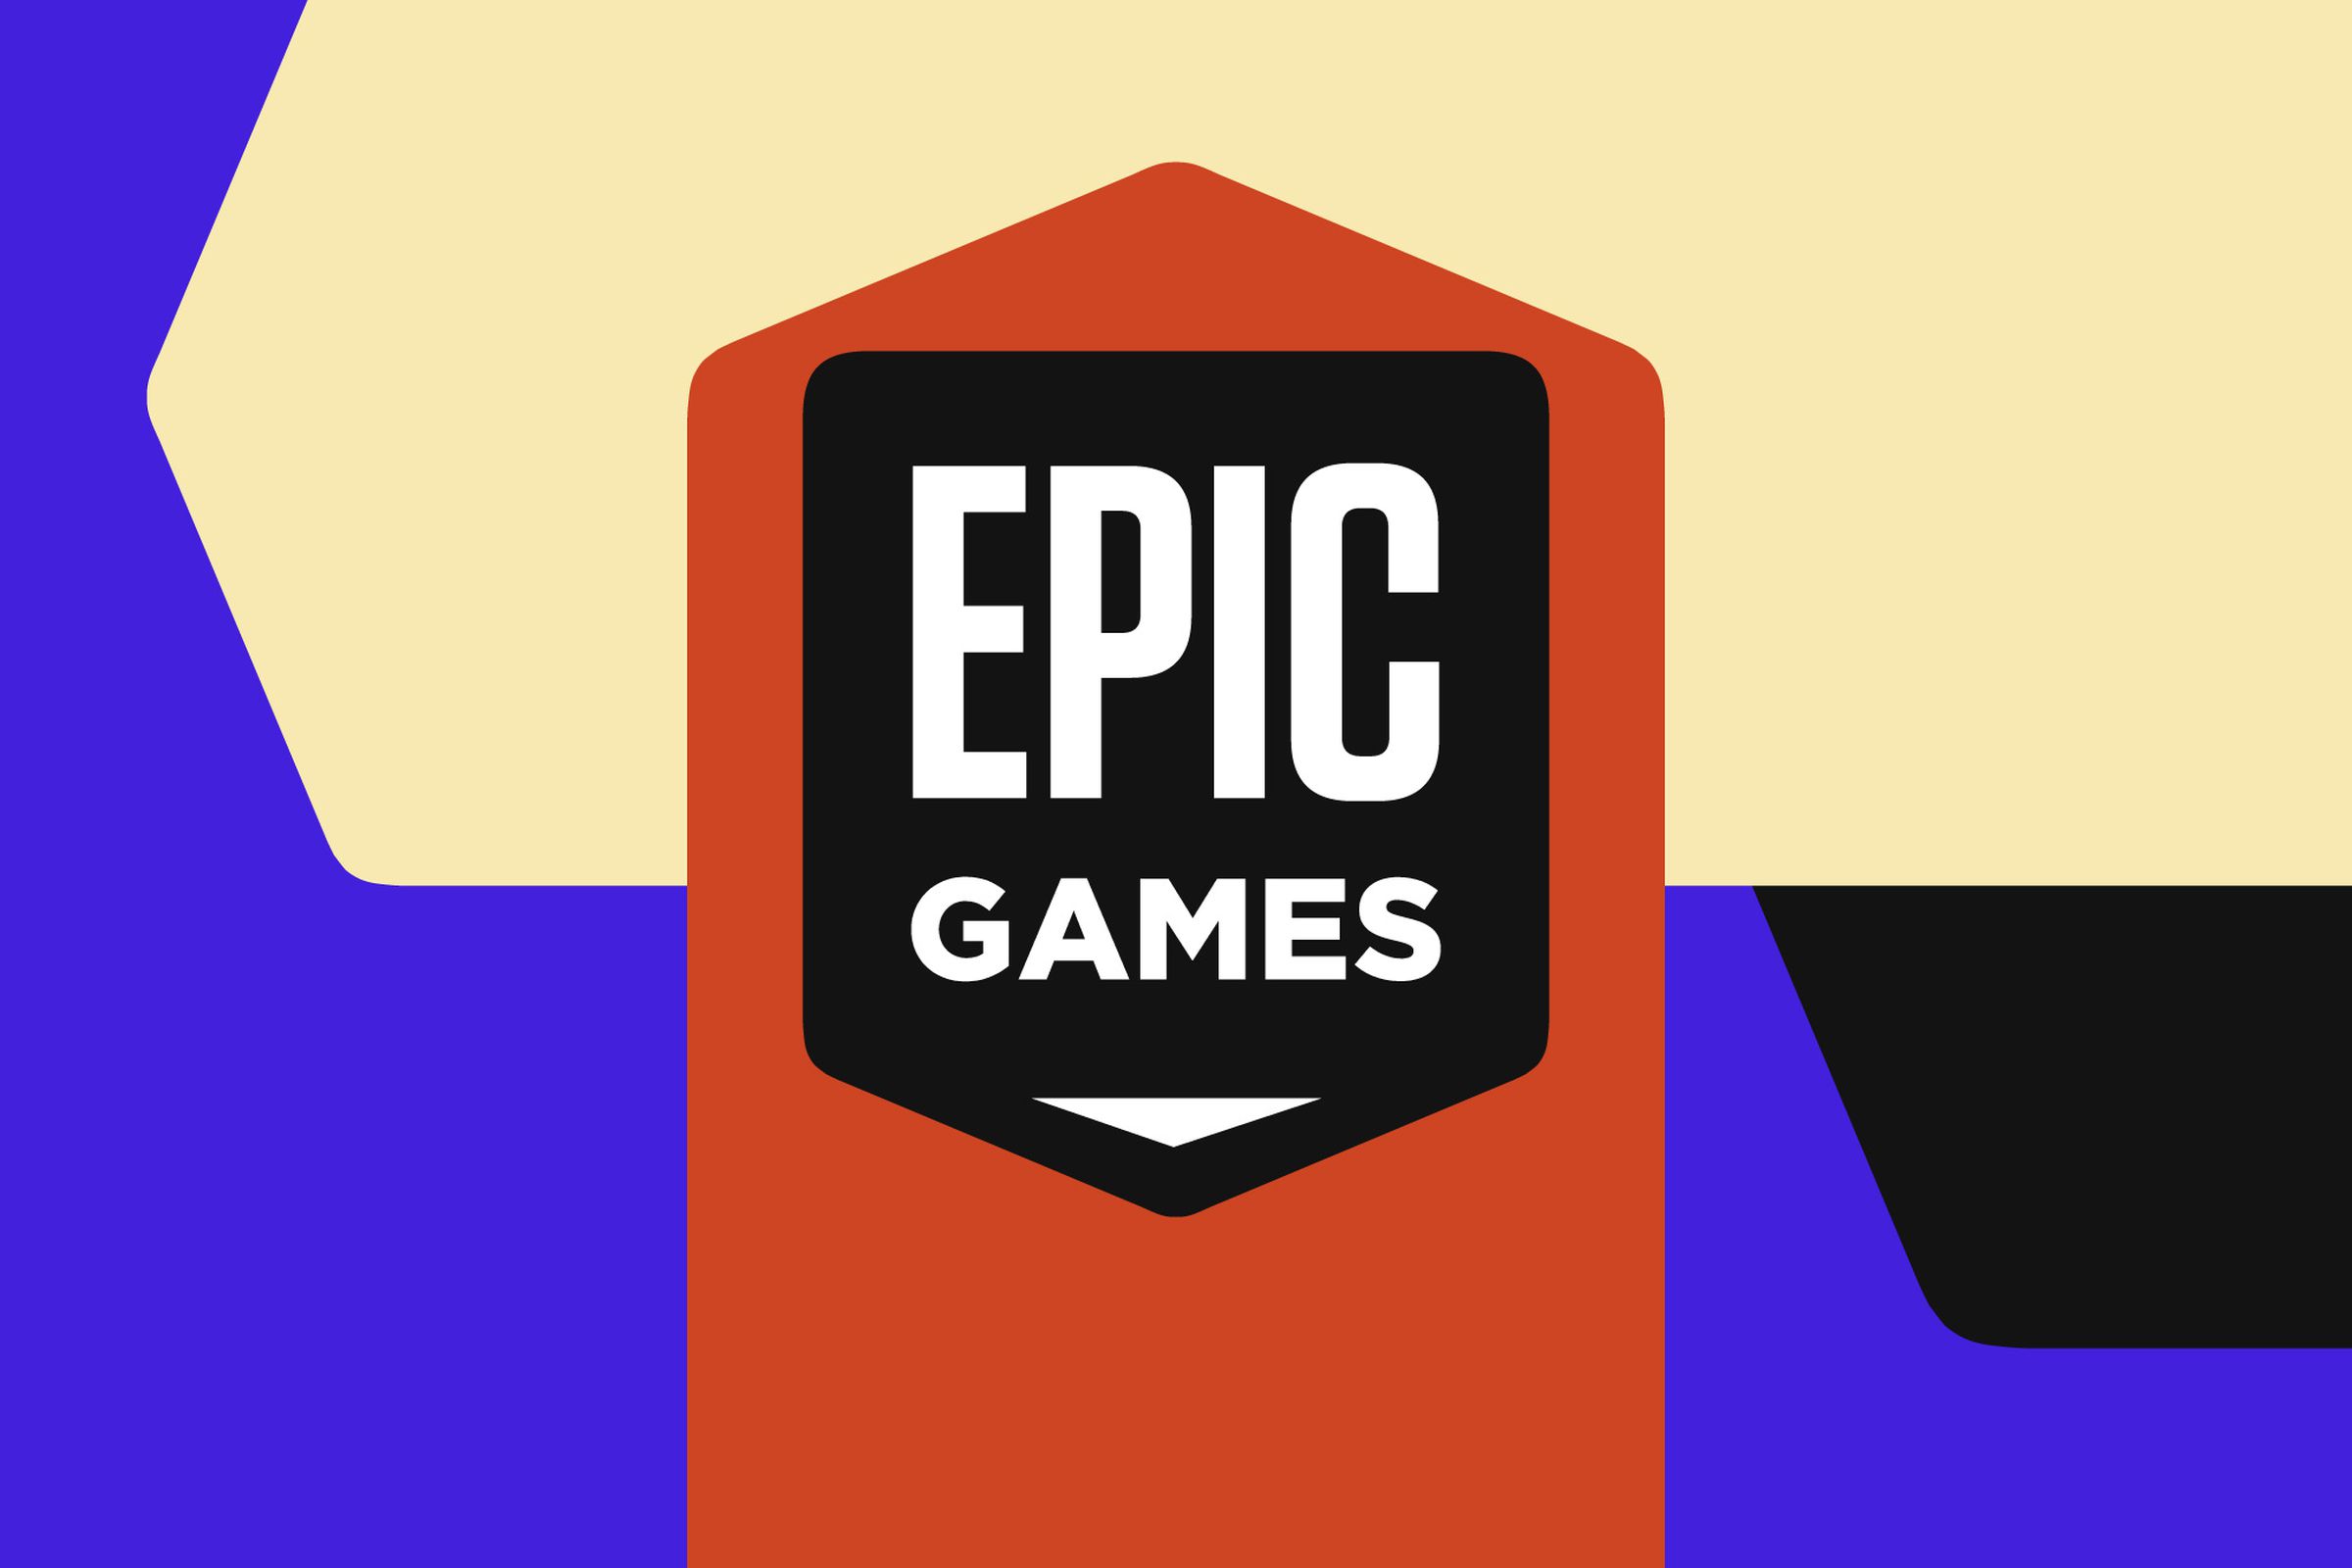 An illustration of Epic Games’ logo.